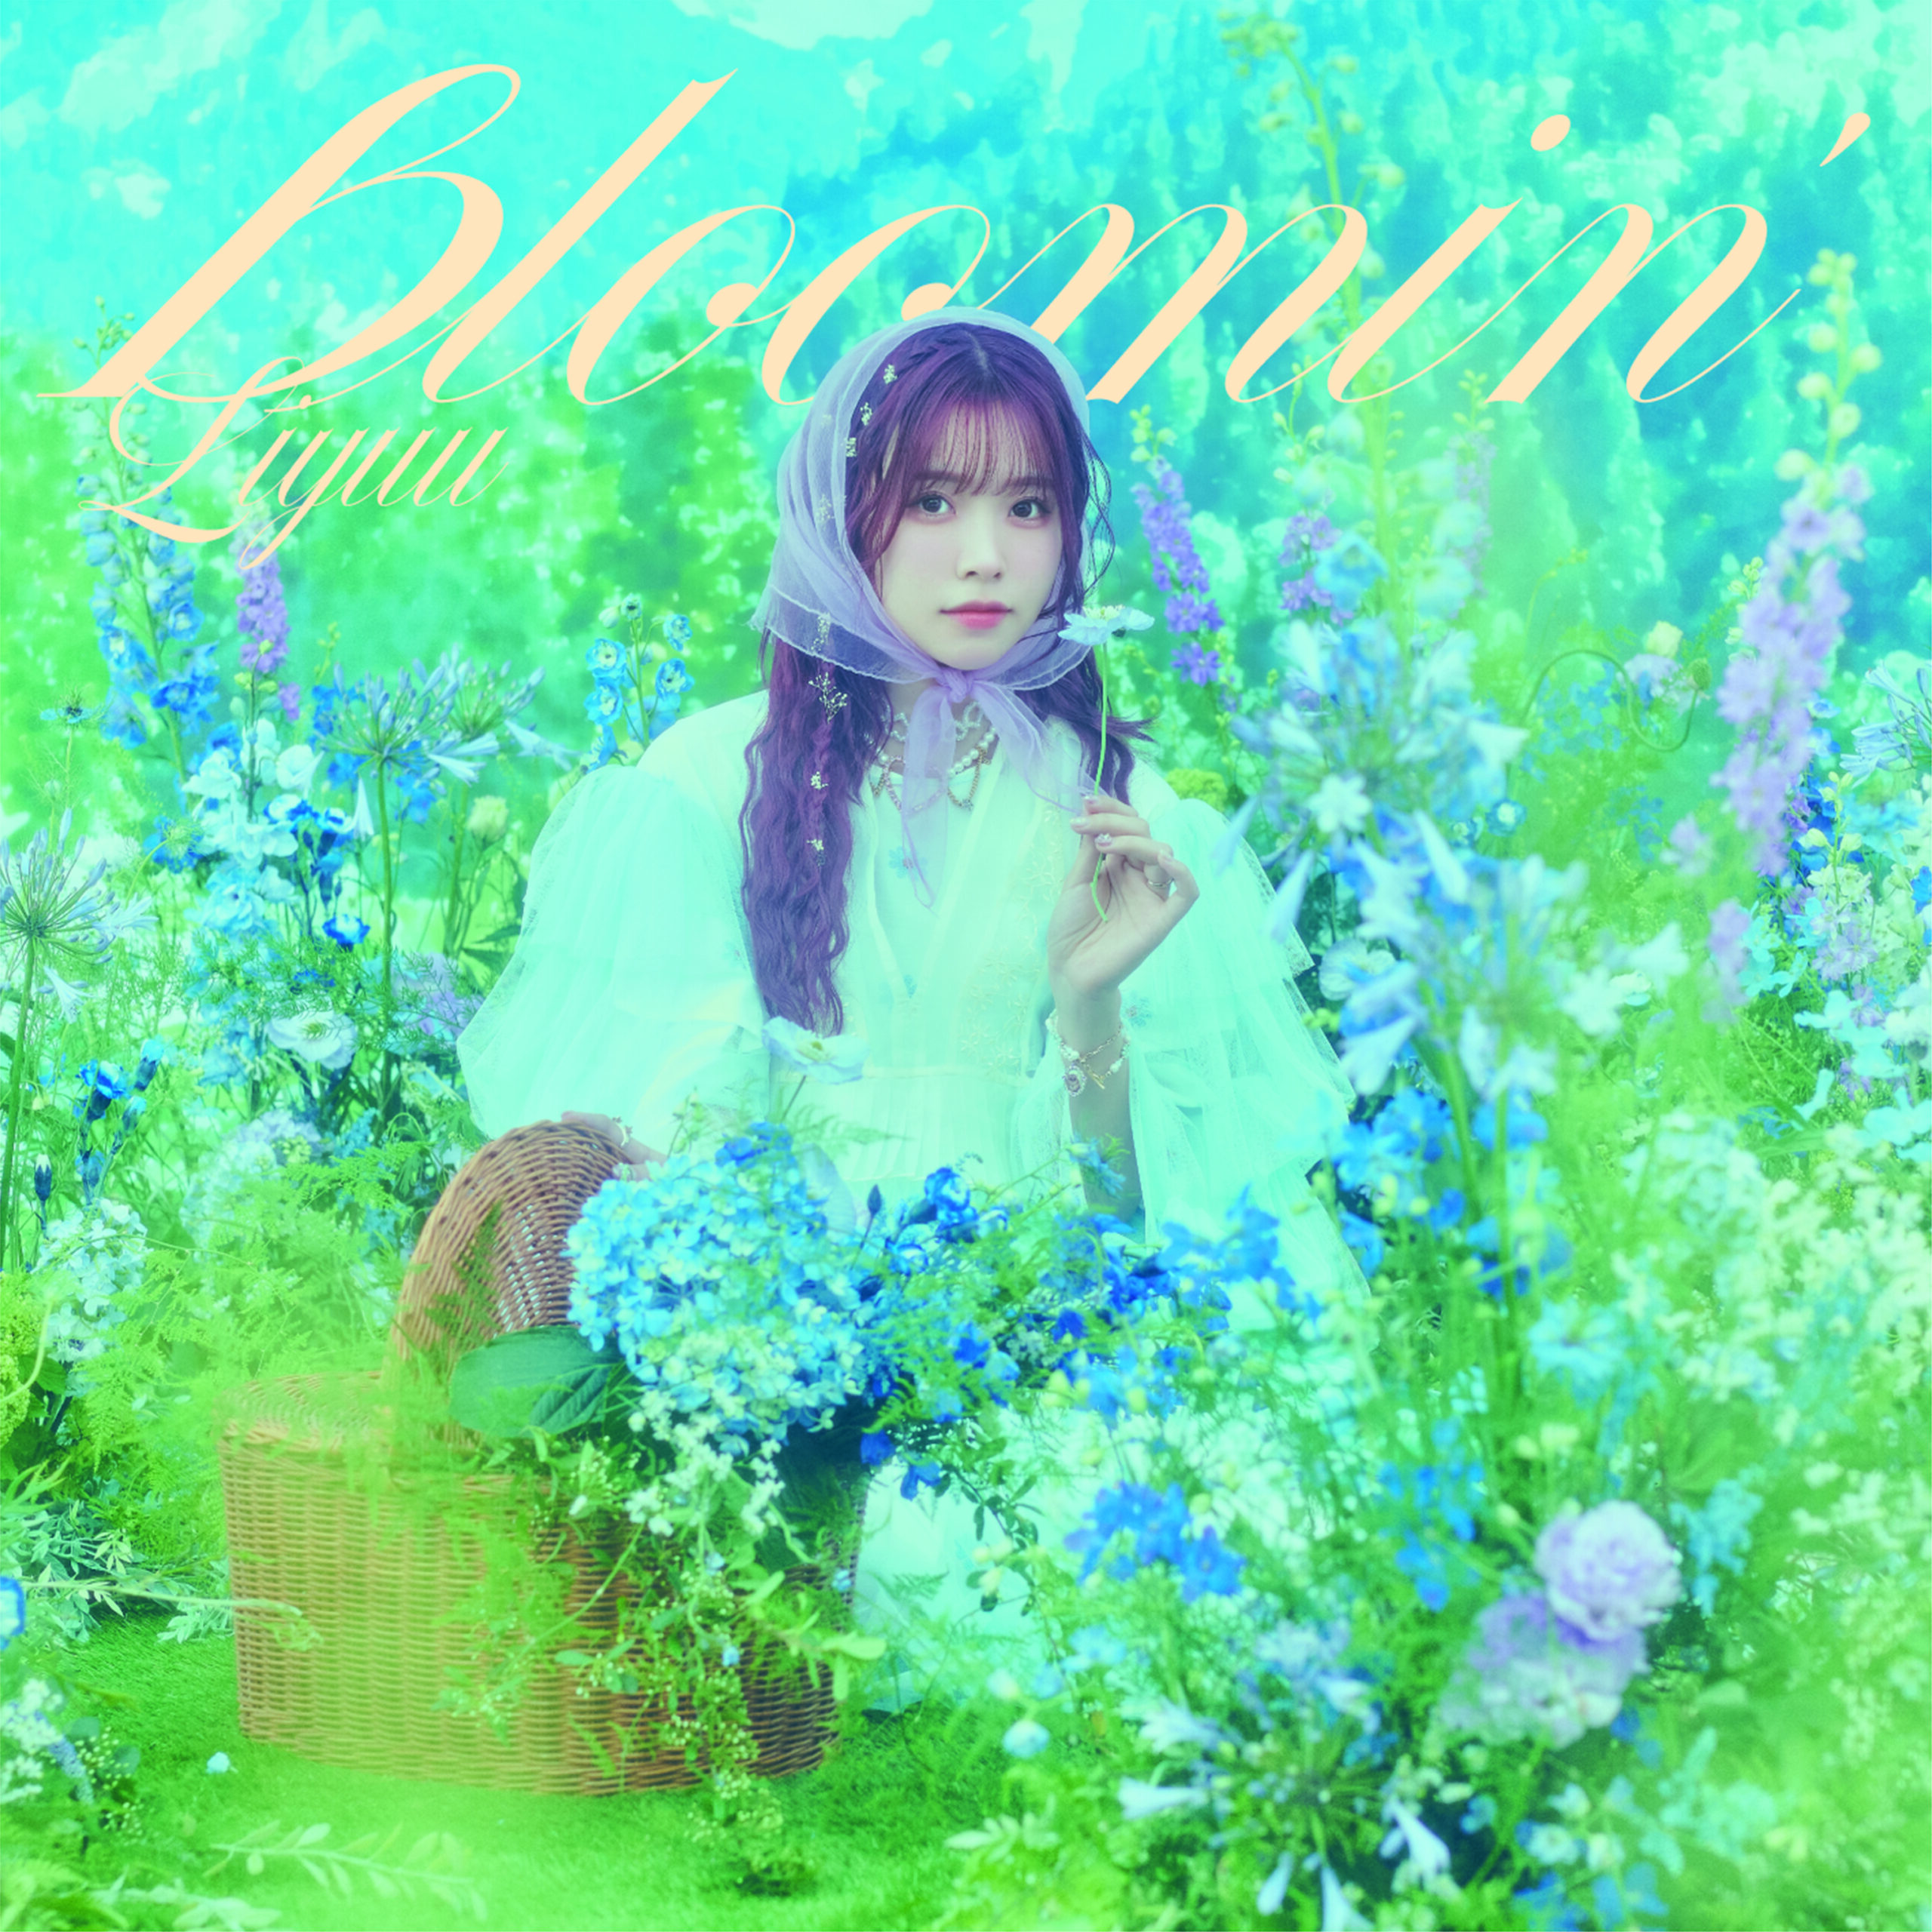 Liyuu "bloomin'" single. Photo provided by Lantis